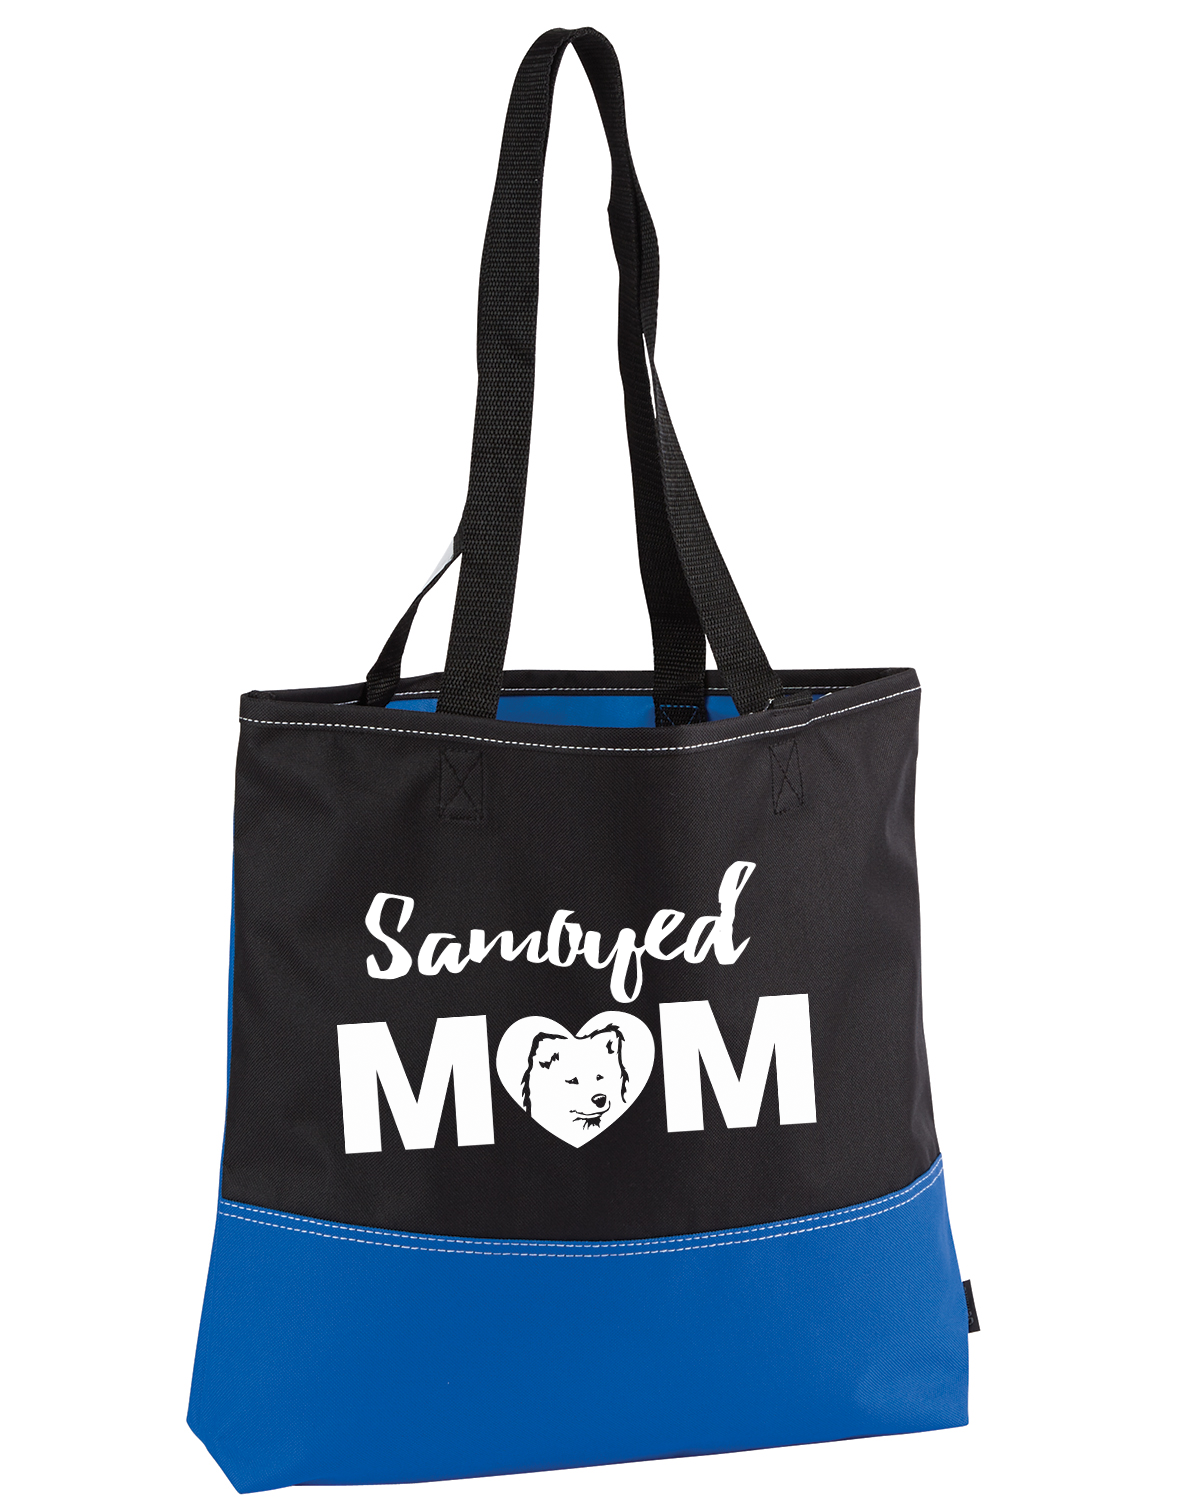 Samoyed Mom Tote, Bag - Dogs - Super Fun & Cute